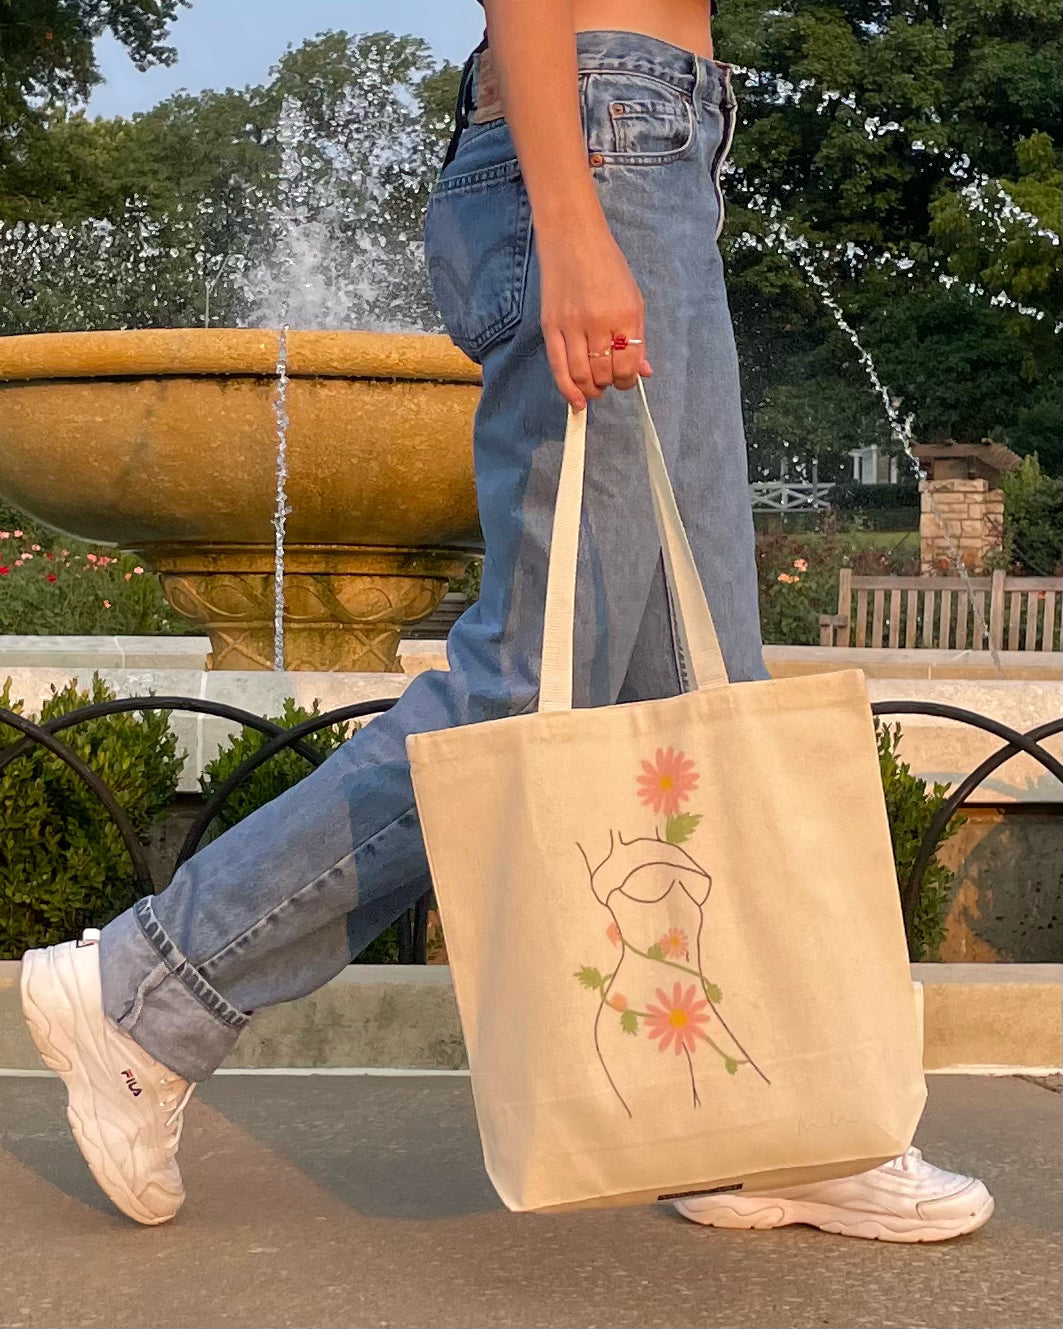 Flower Power Tote Bag